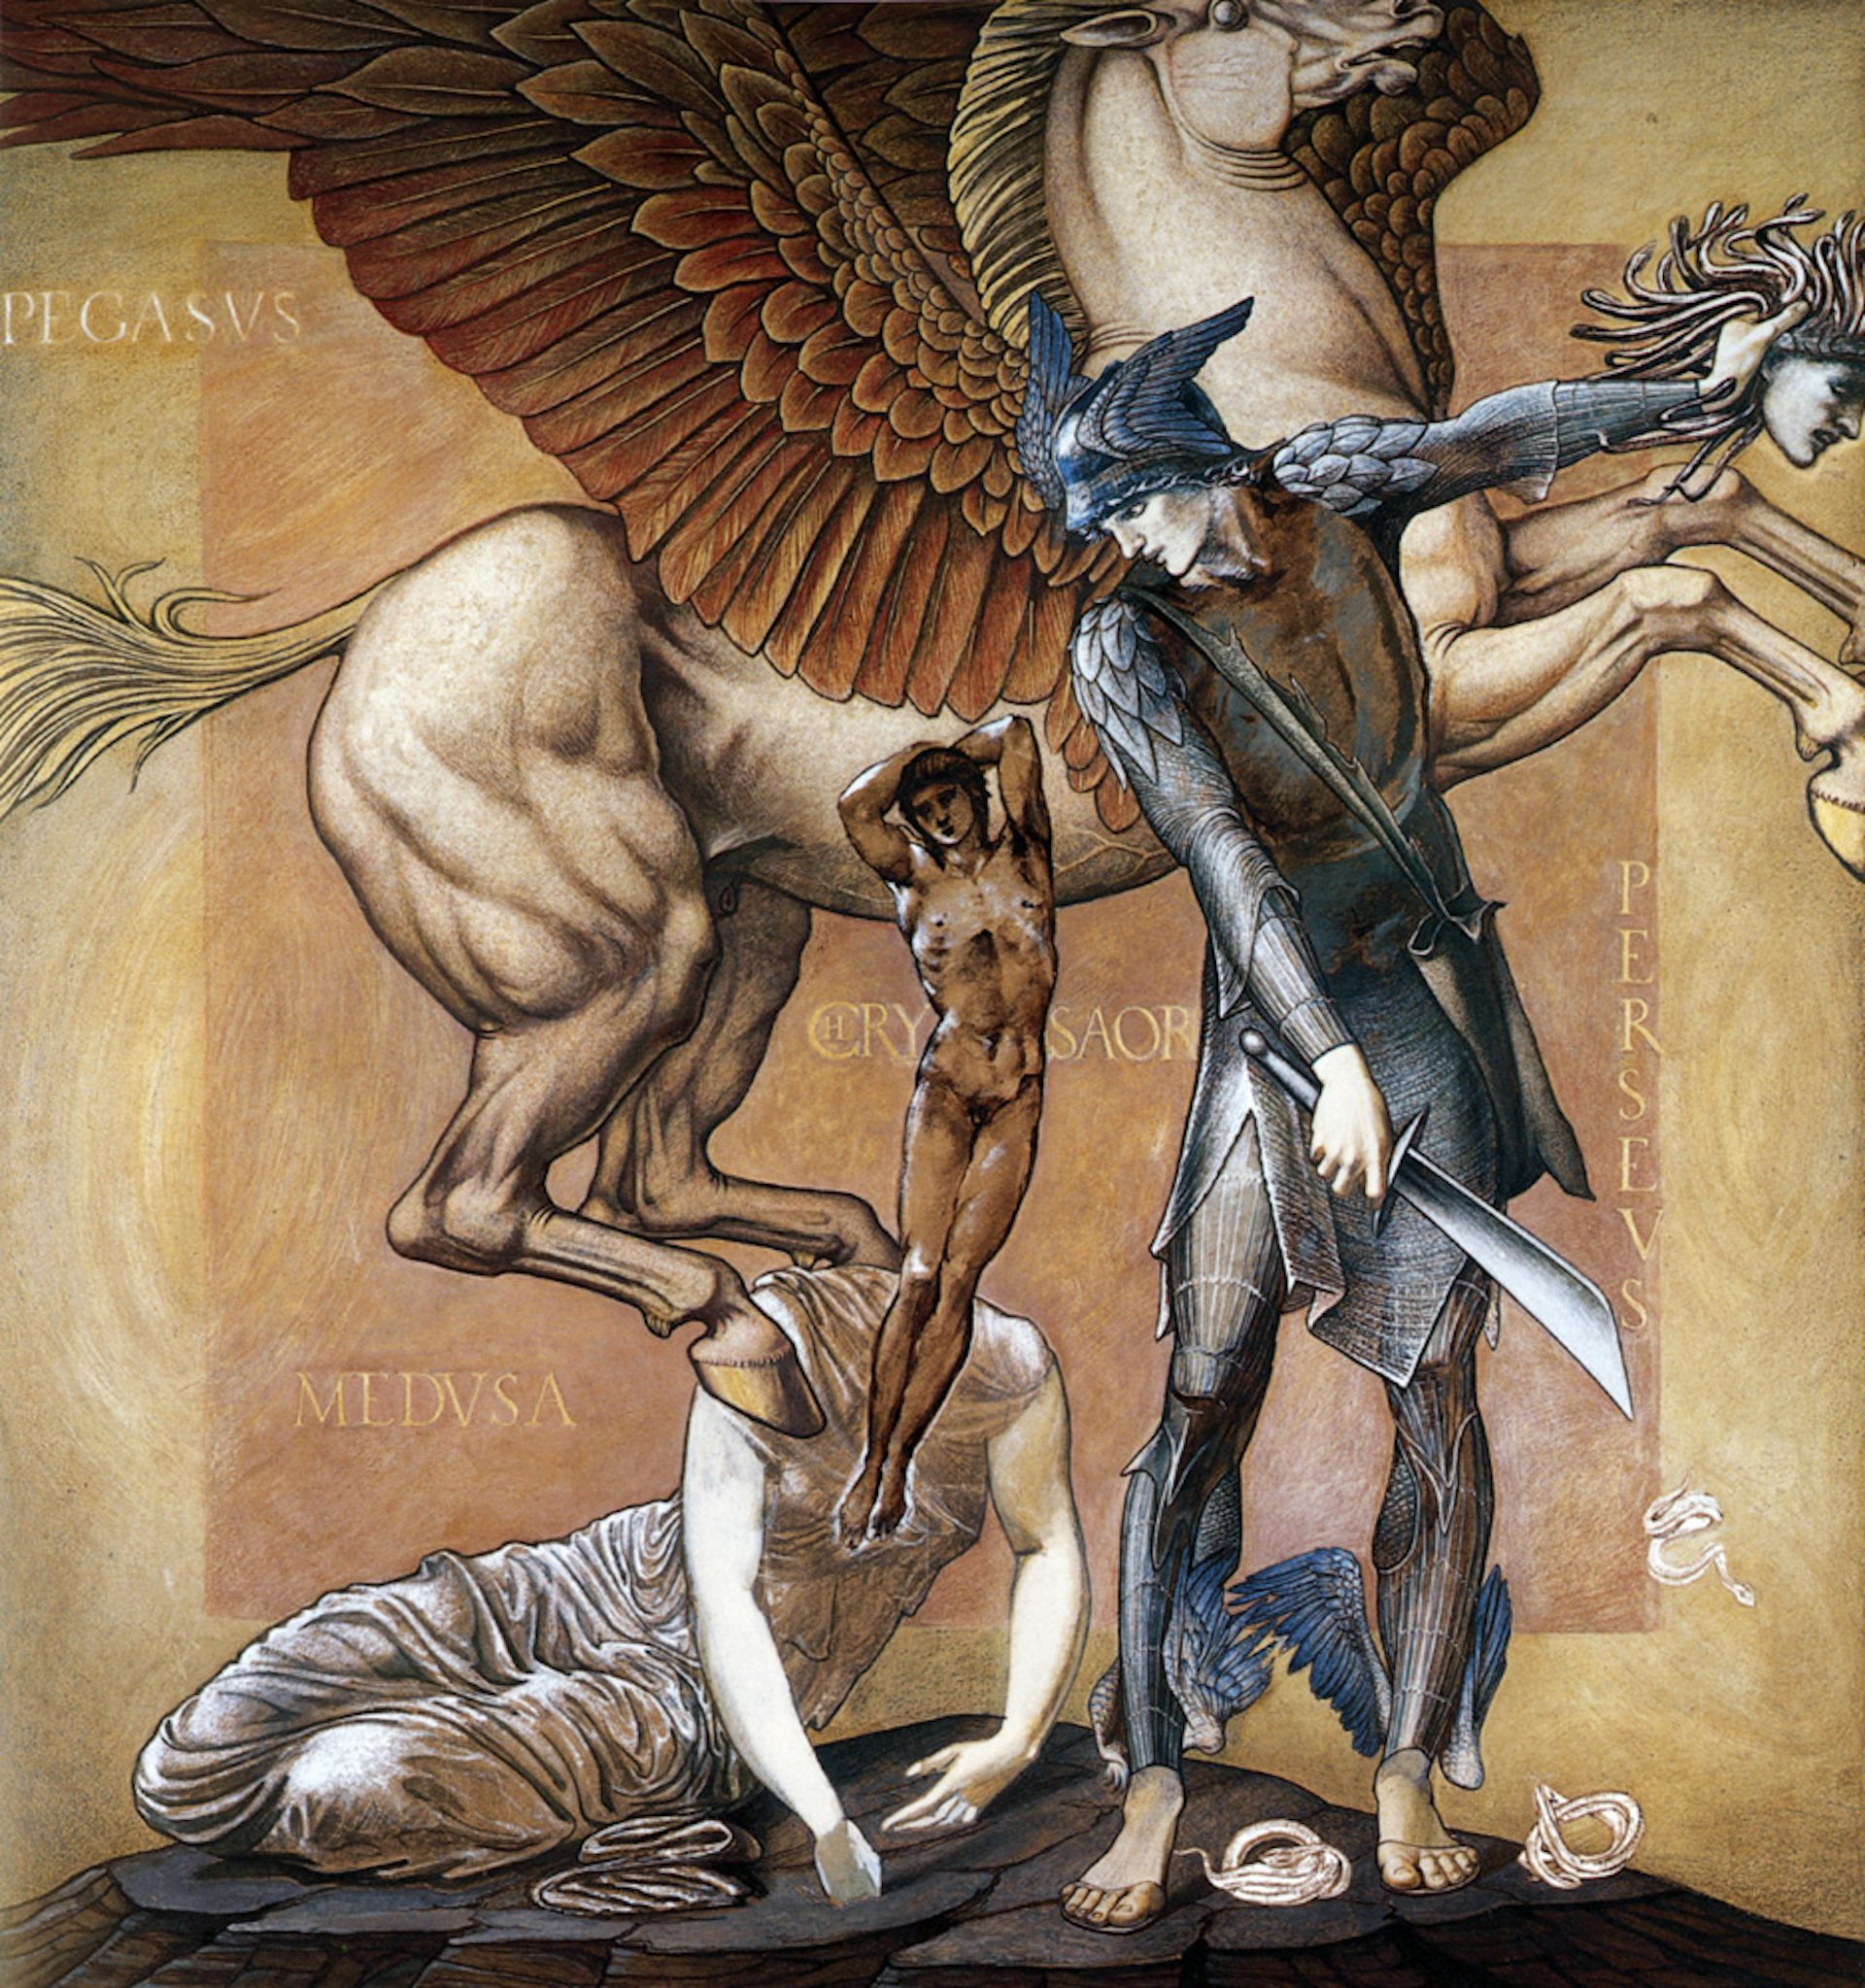 The Death of Medusa I by Edward Burne-Jones